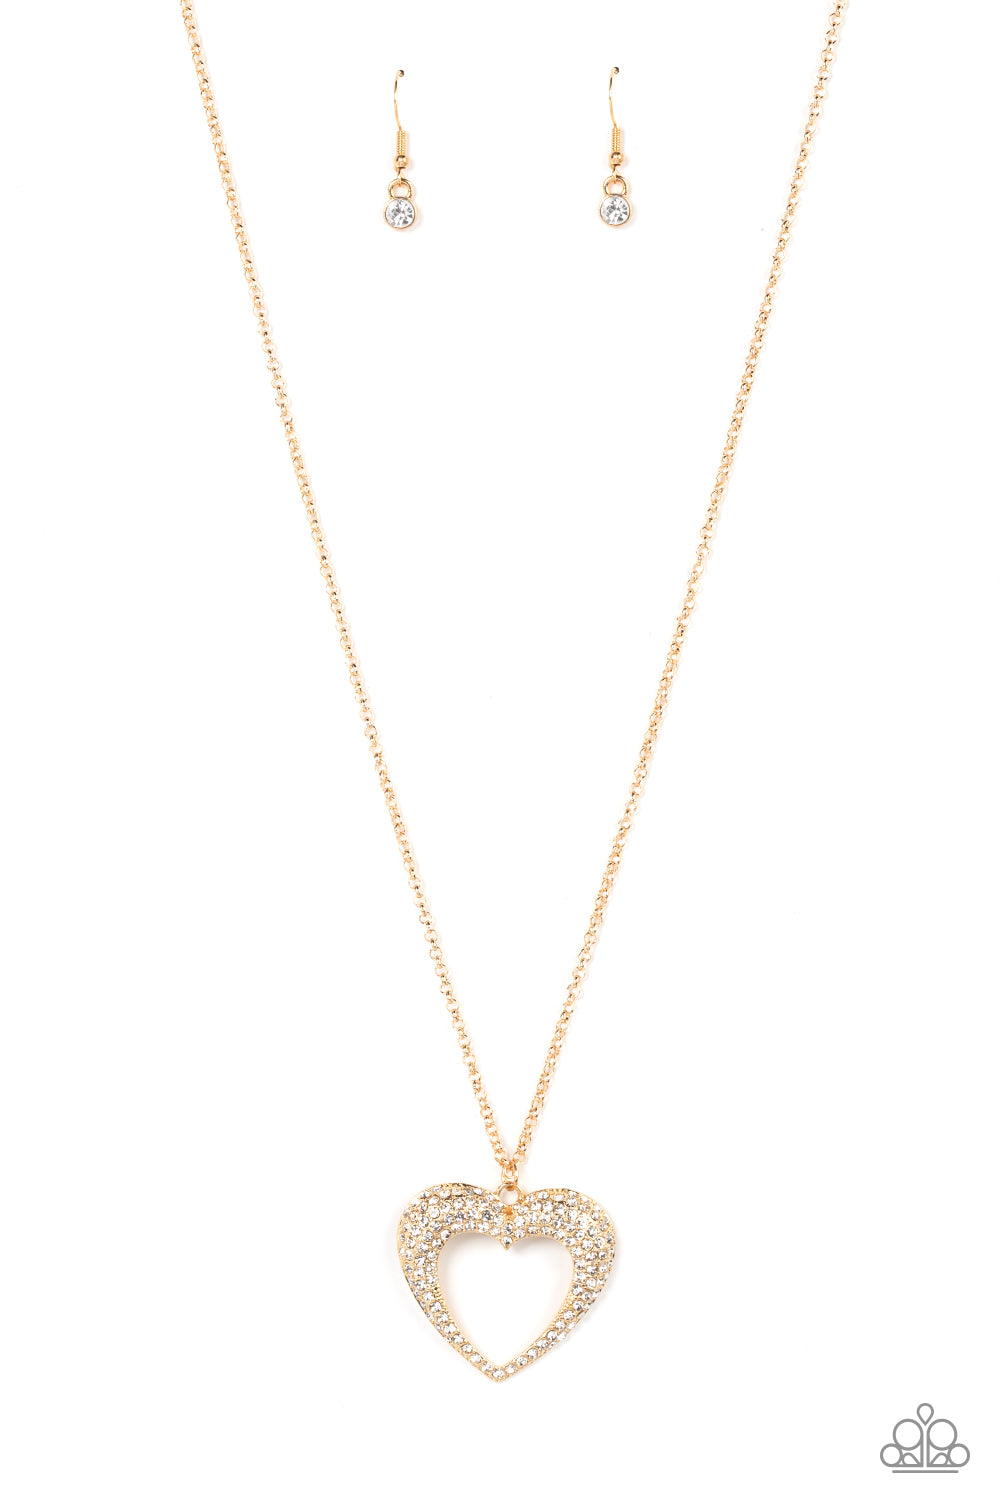 Cupid Charisma Necklace (Copper, White, Gold)